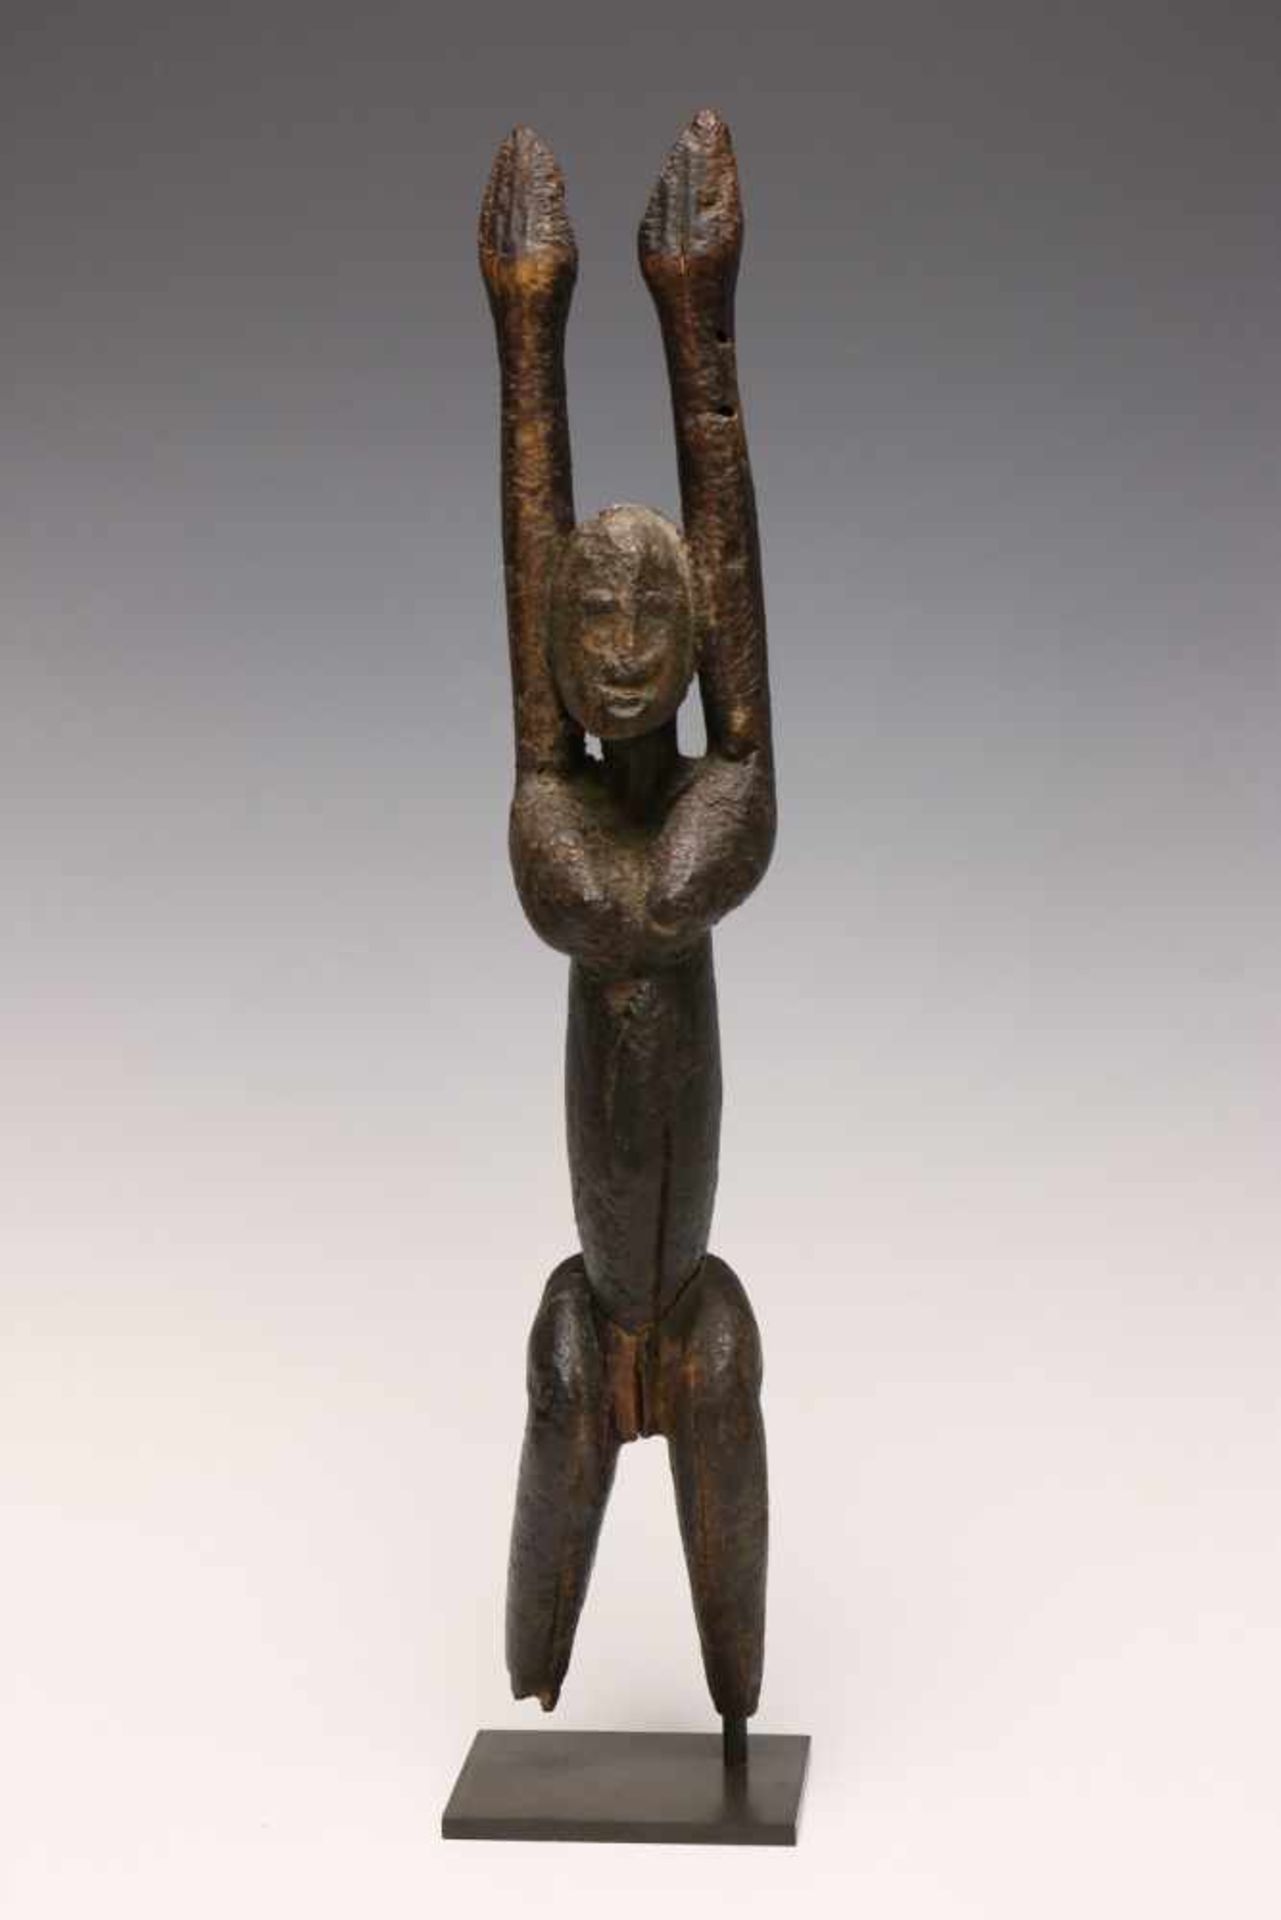 Dogon, standing antropomorphic figure,with raised arms and dark oily patina. Provenance, Steven de - Bild 4 aus 6